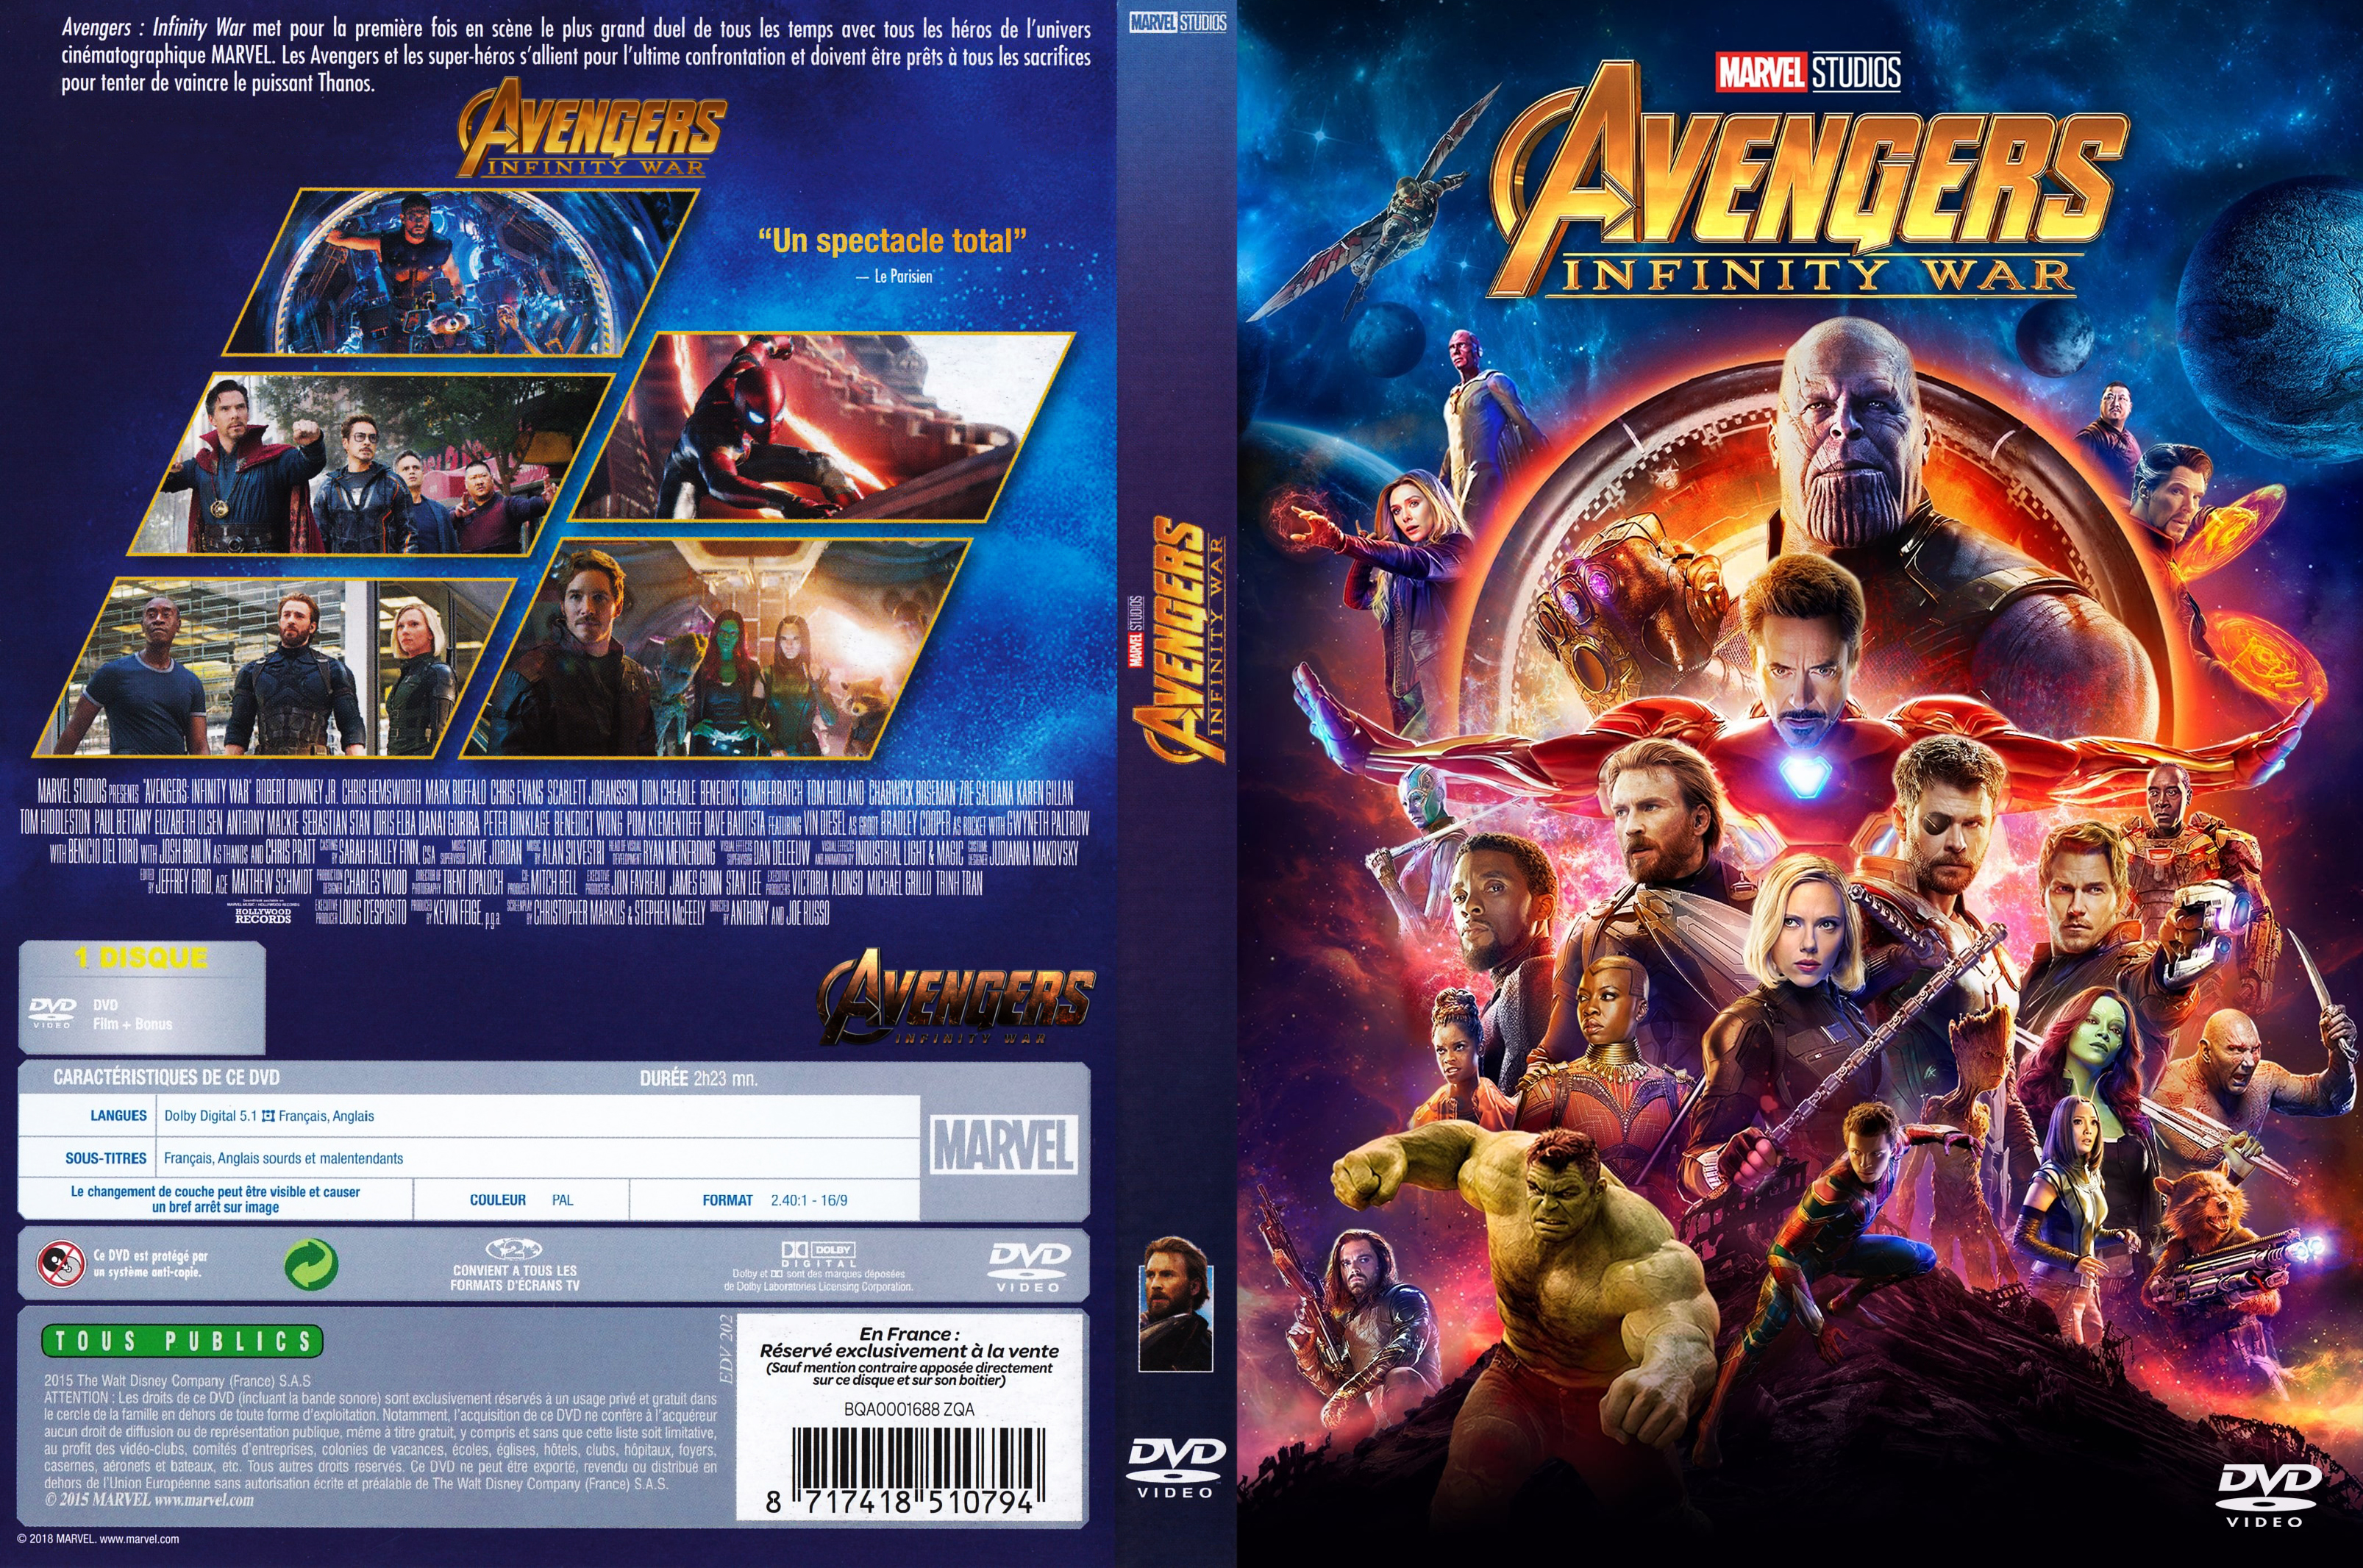 Jaquette DVD Avengers Infinity War custom